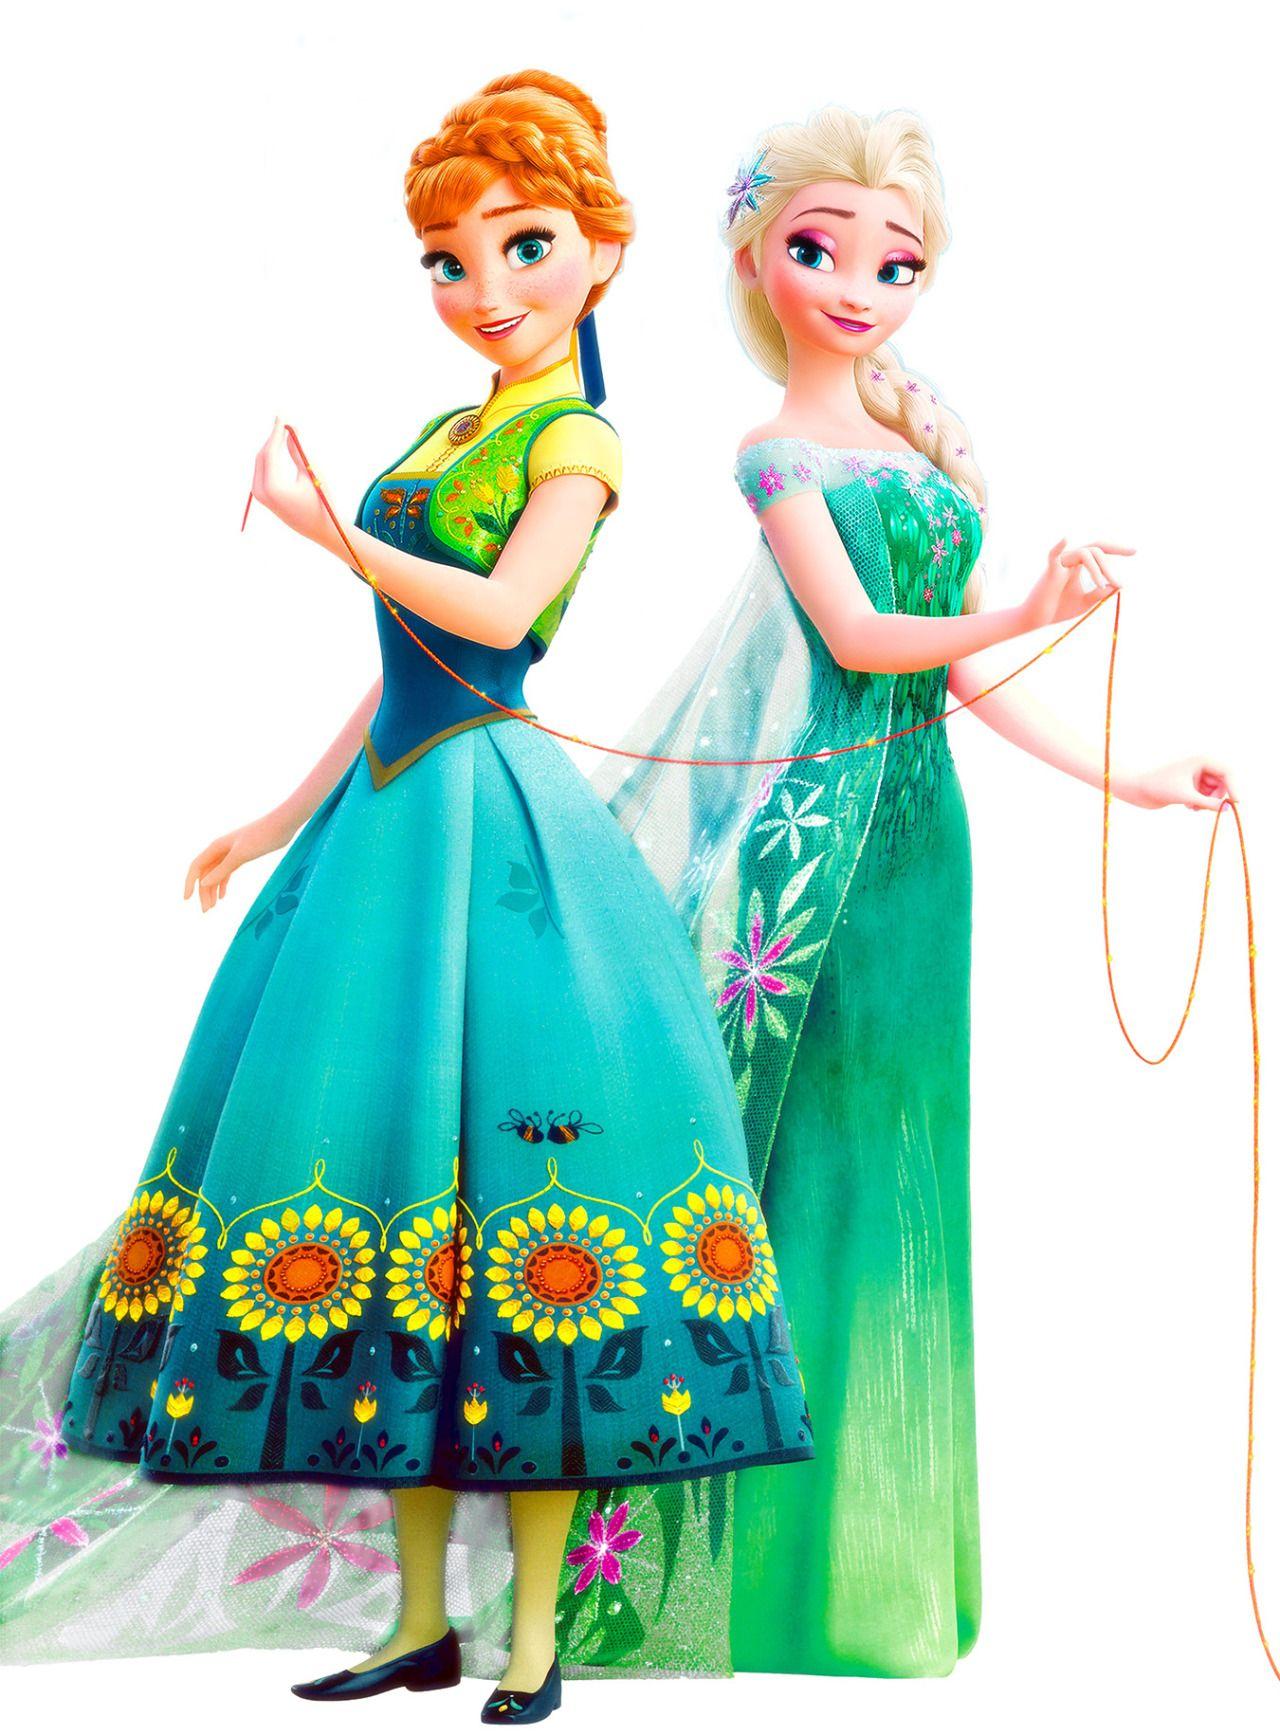 Frozen Fever Phone wallpaper - Elsa e Anna foto (39413649 